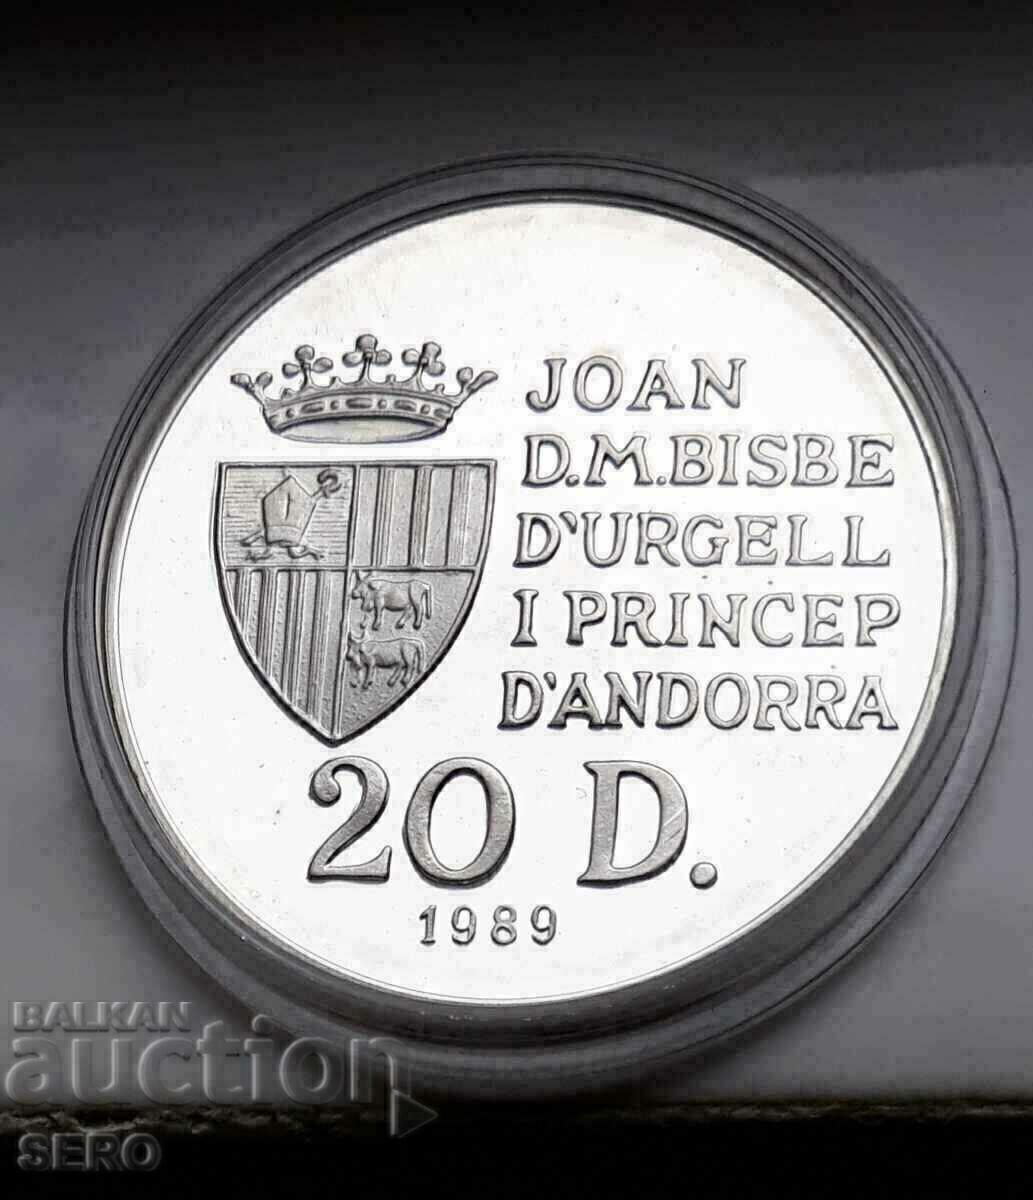 Andorra-20 dinars 1989-silver and rare-circulation 15,000 pcs